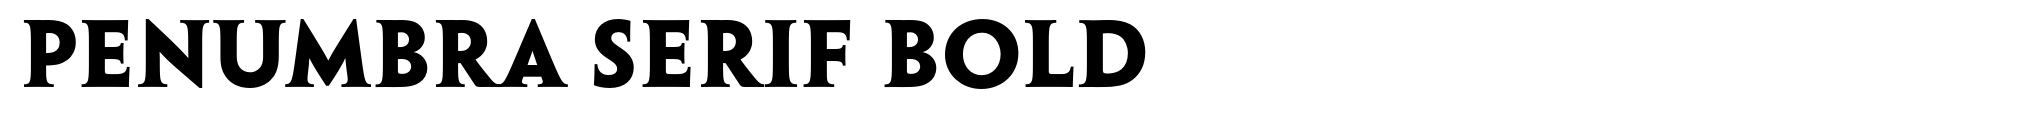 Penumbra Serif Bold image